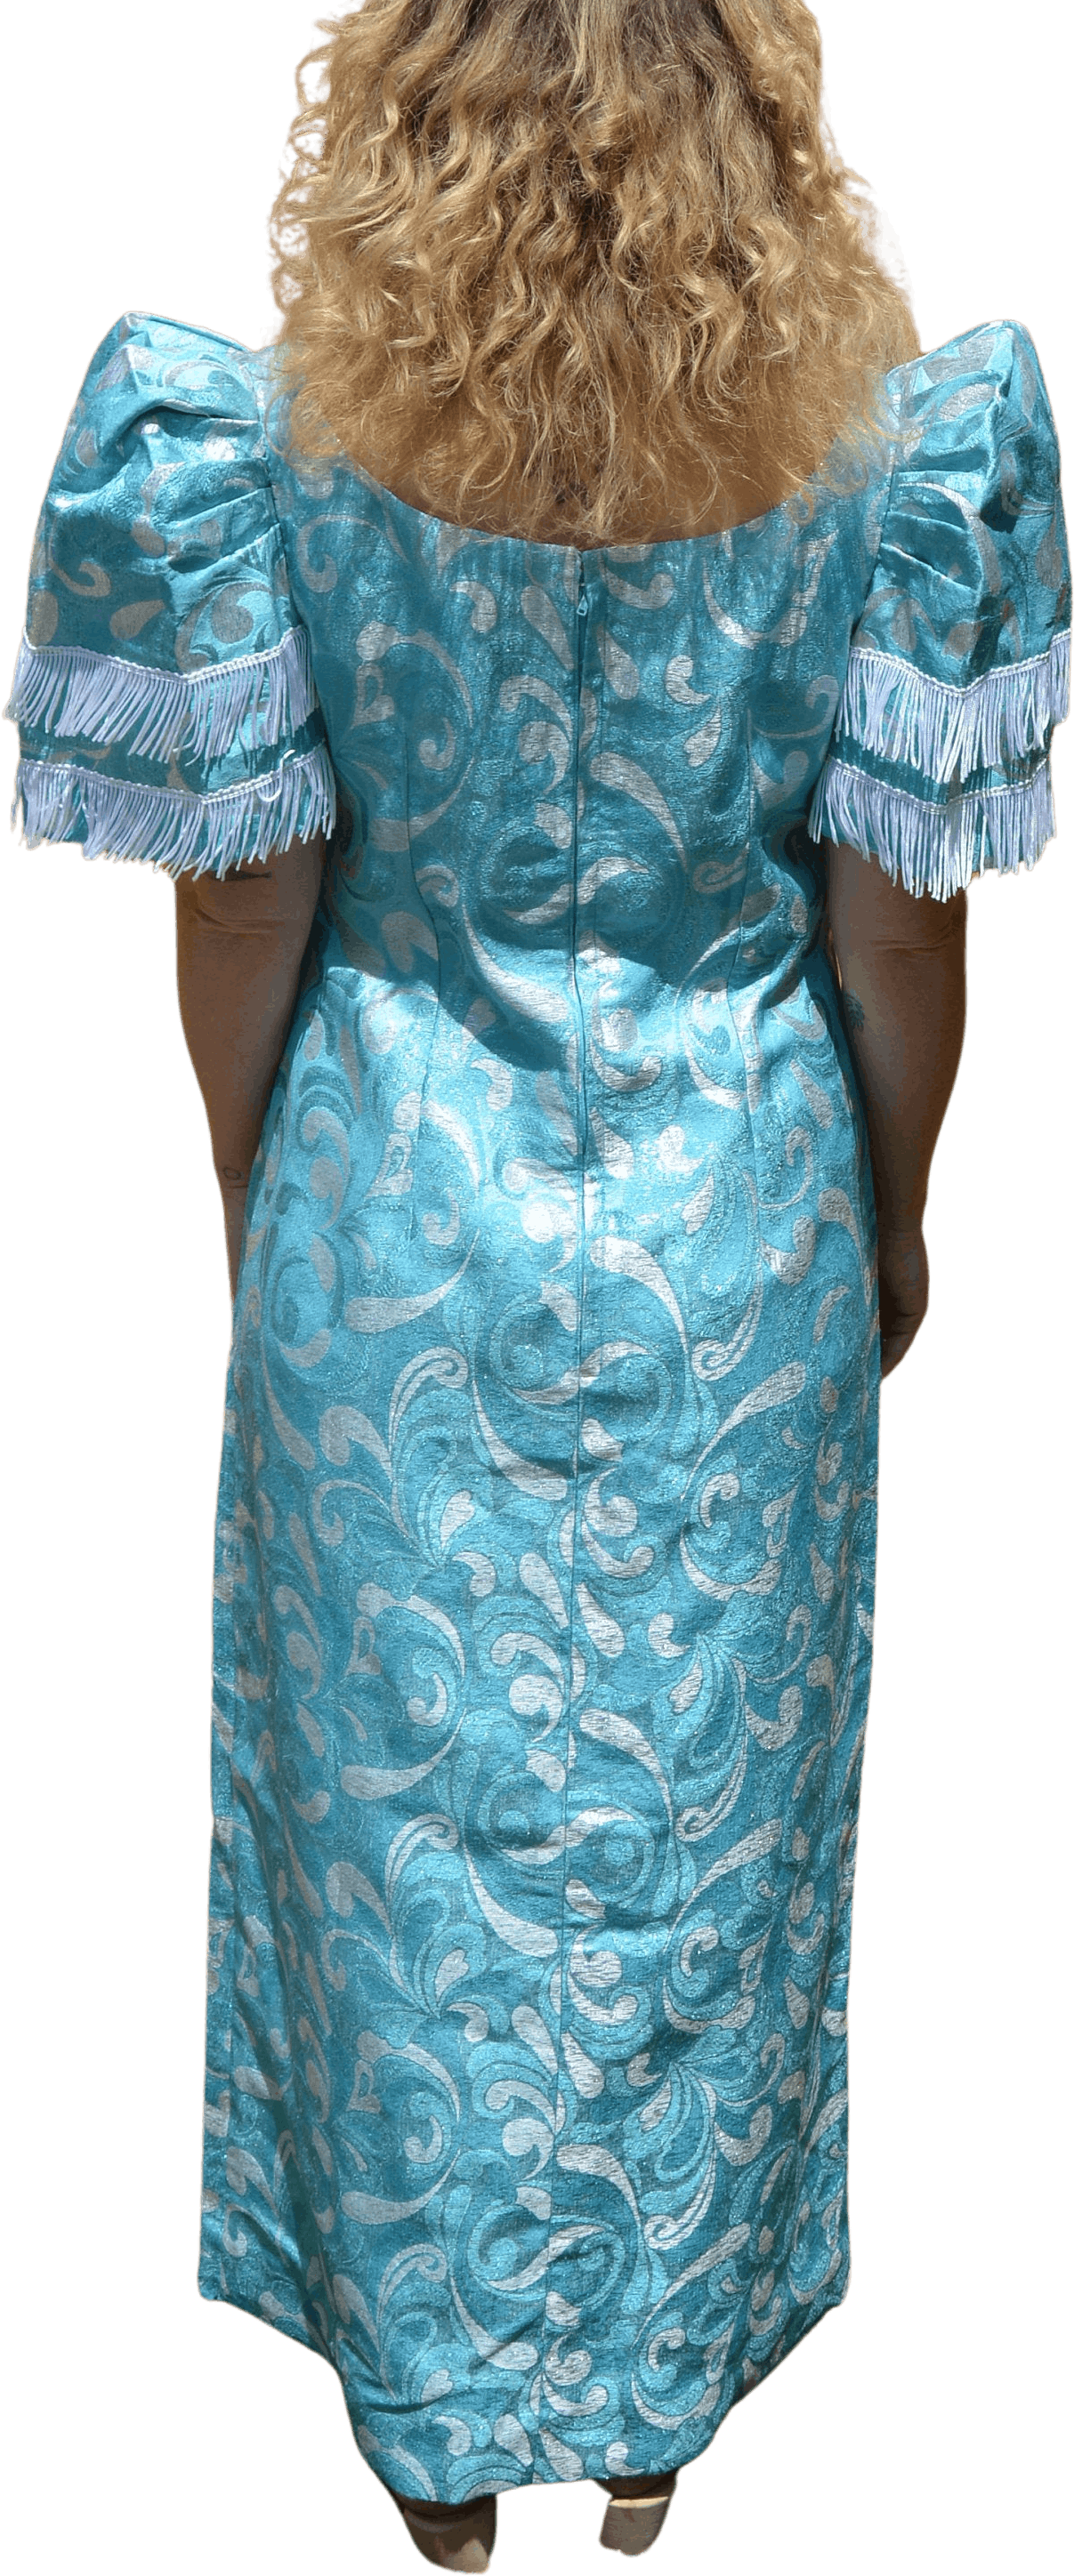 Vintage 60’s Turquoise Brocade Dress with Fringe Detail | Shop THRILLING